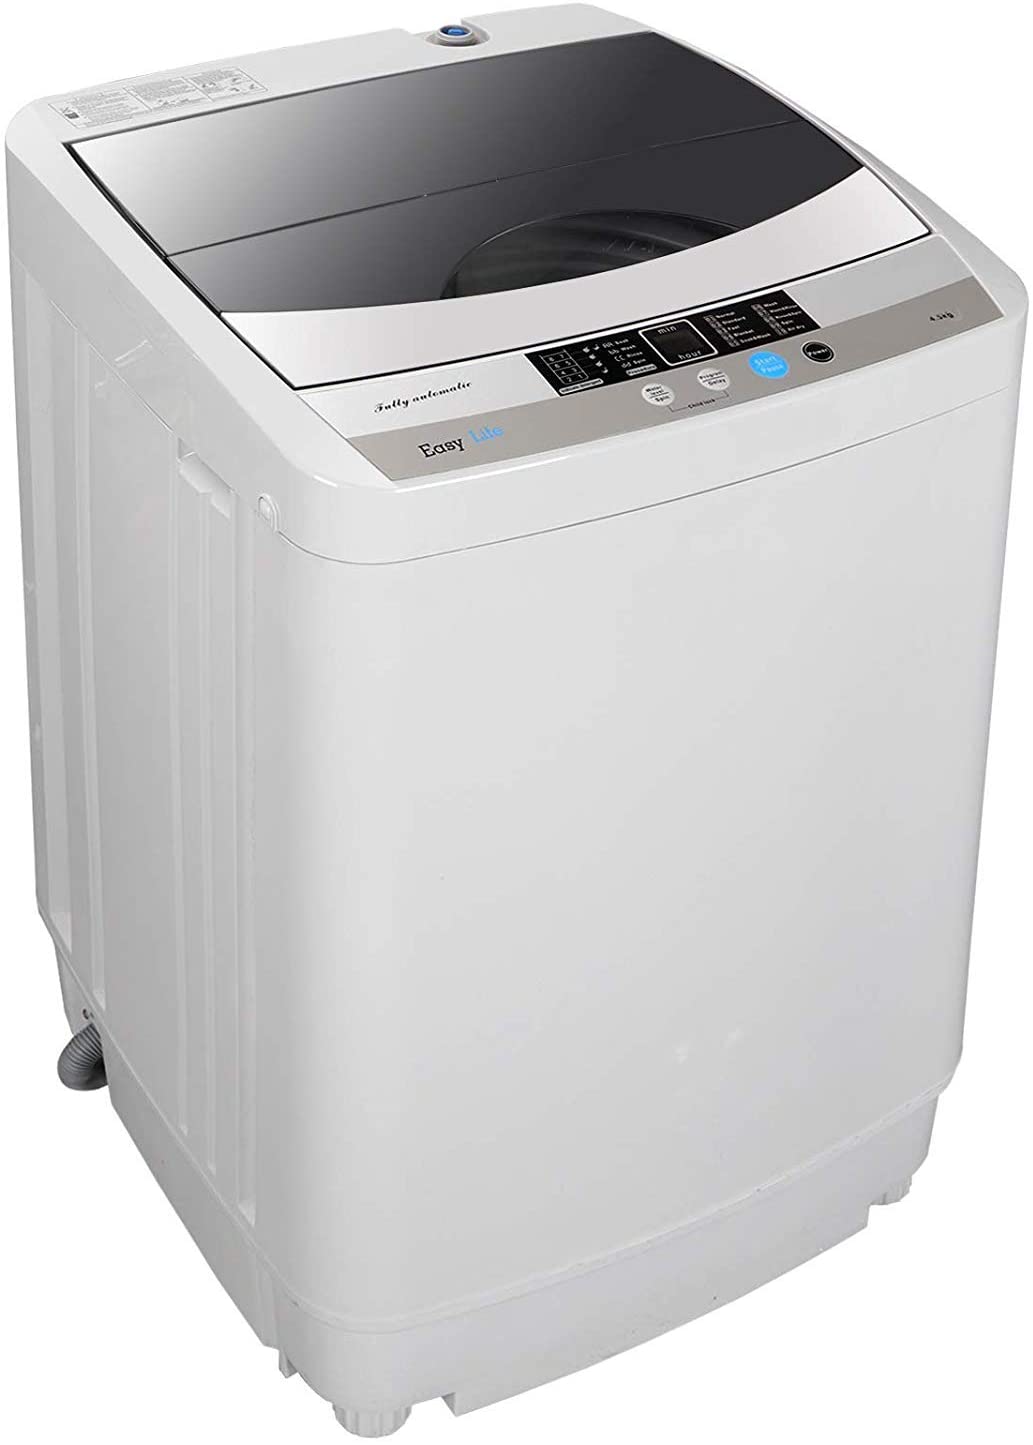 Best High End Portable Washing Machine